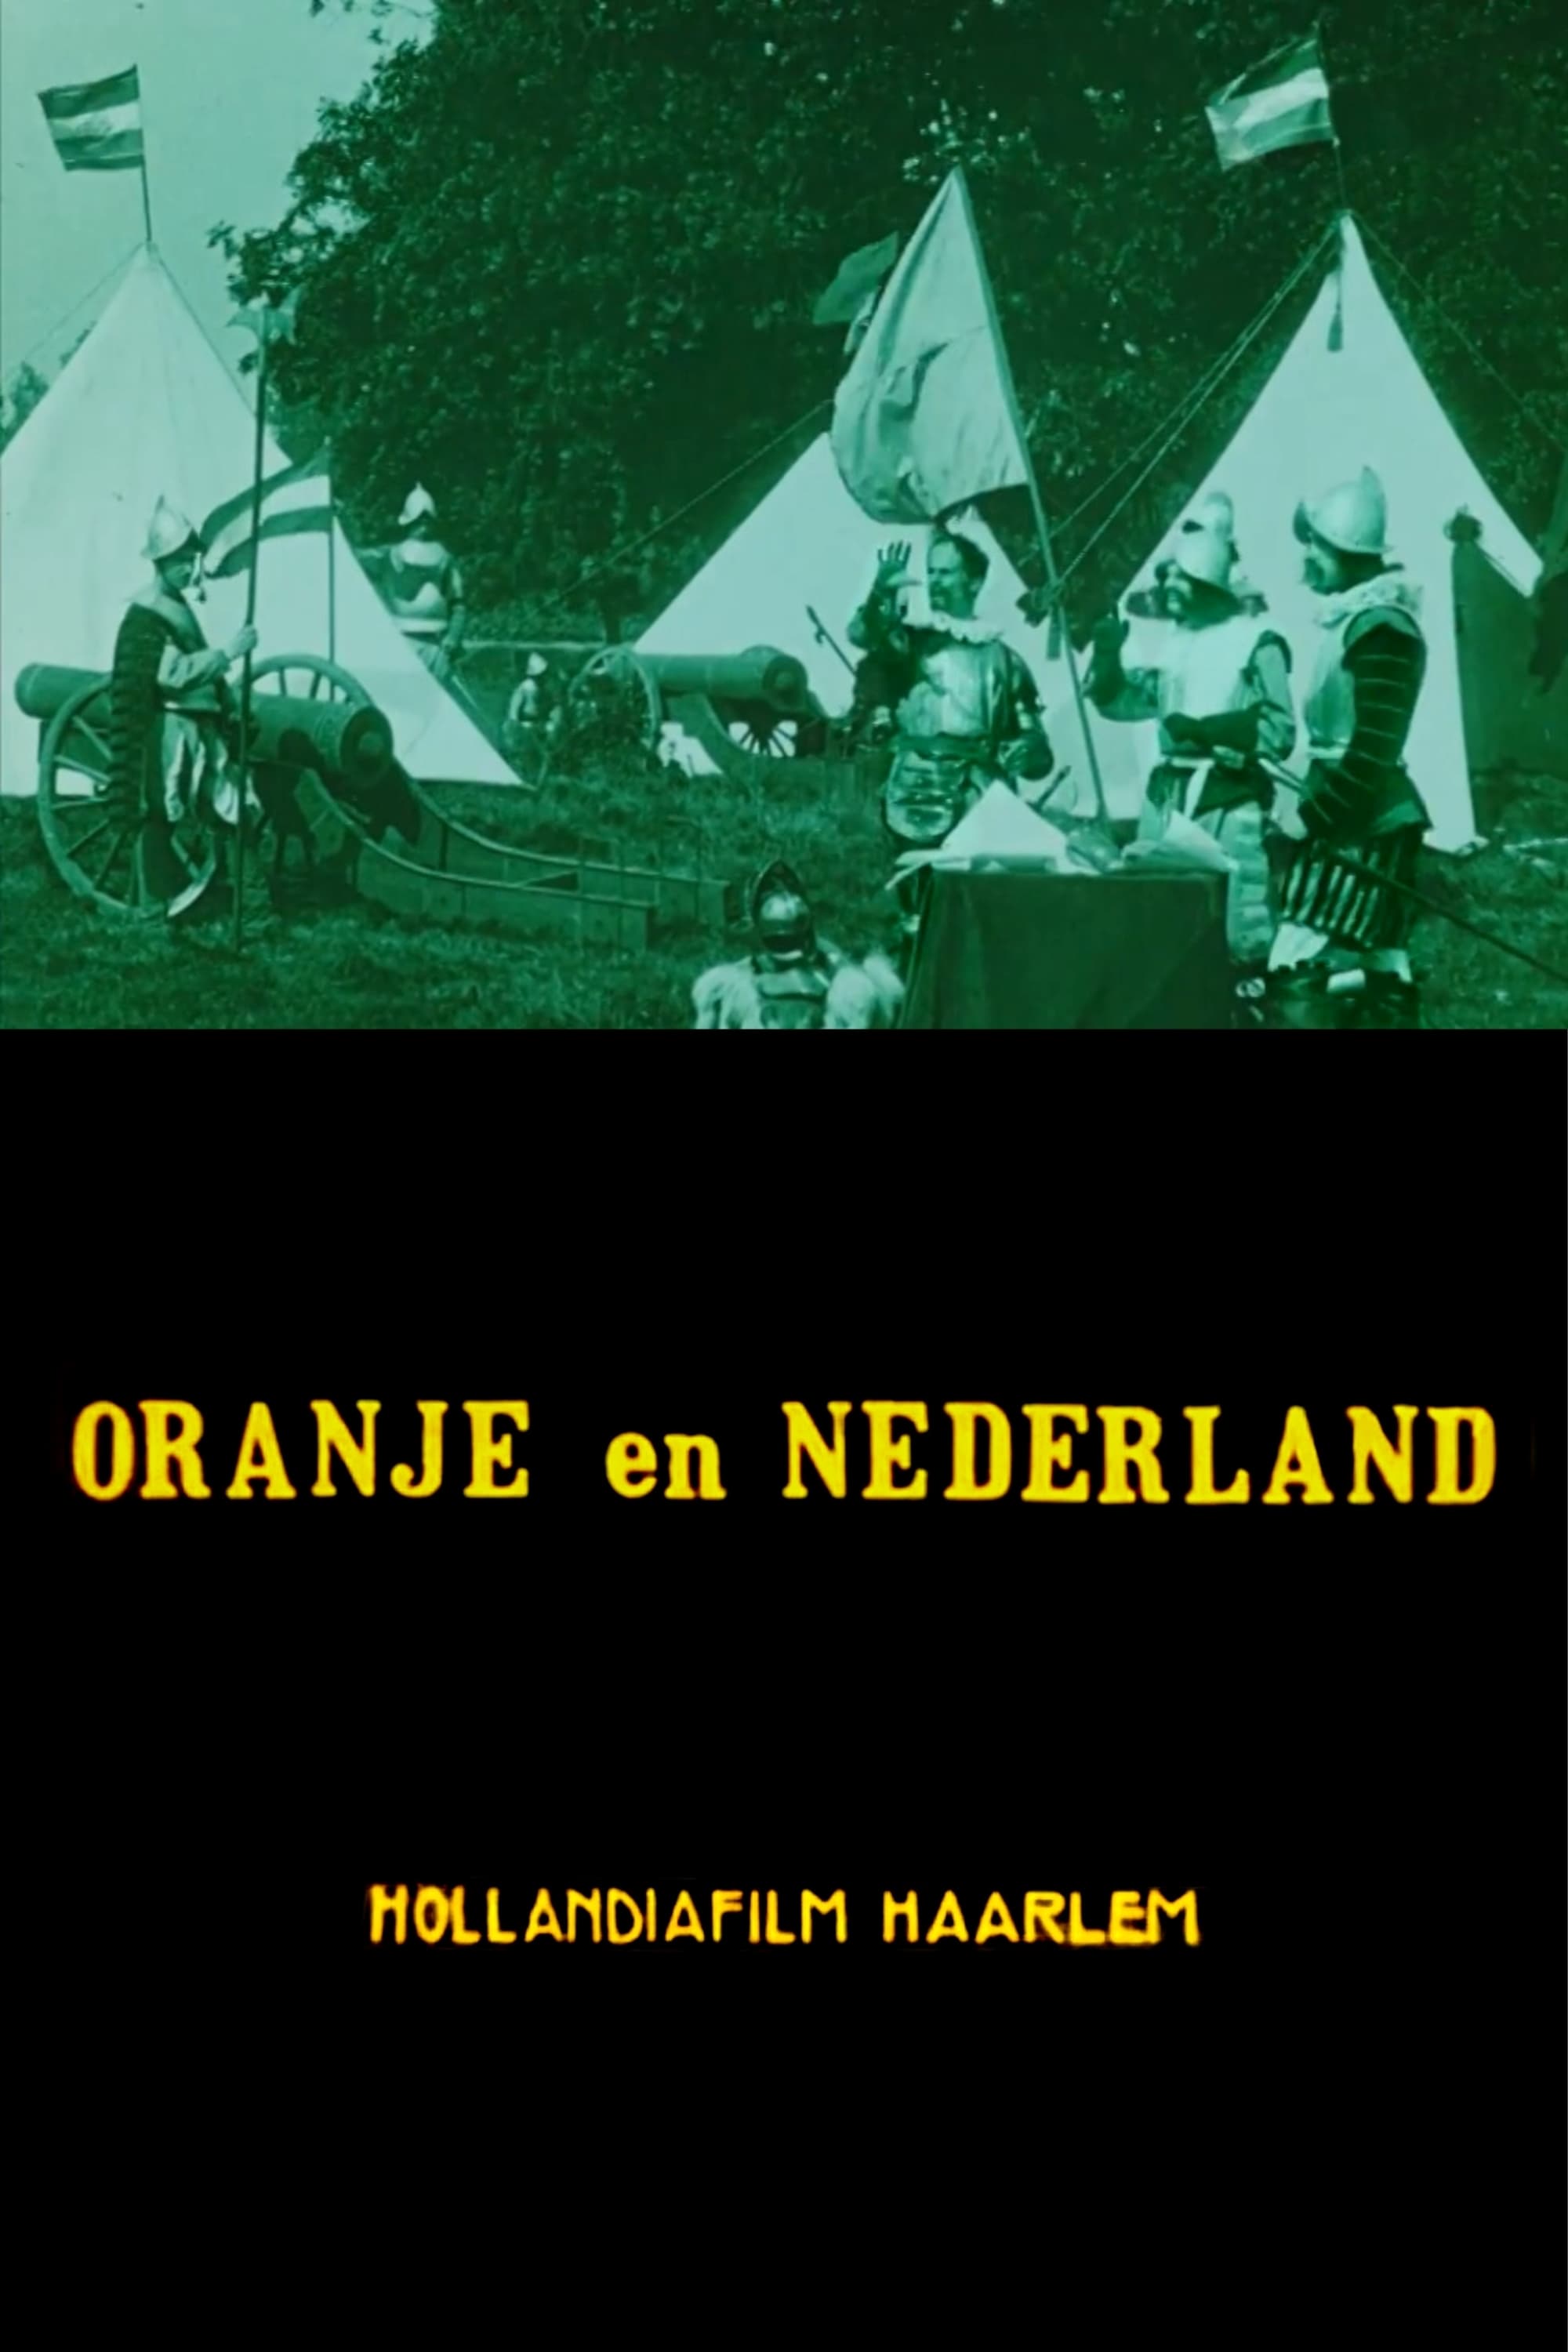 The Netherlands and Orange